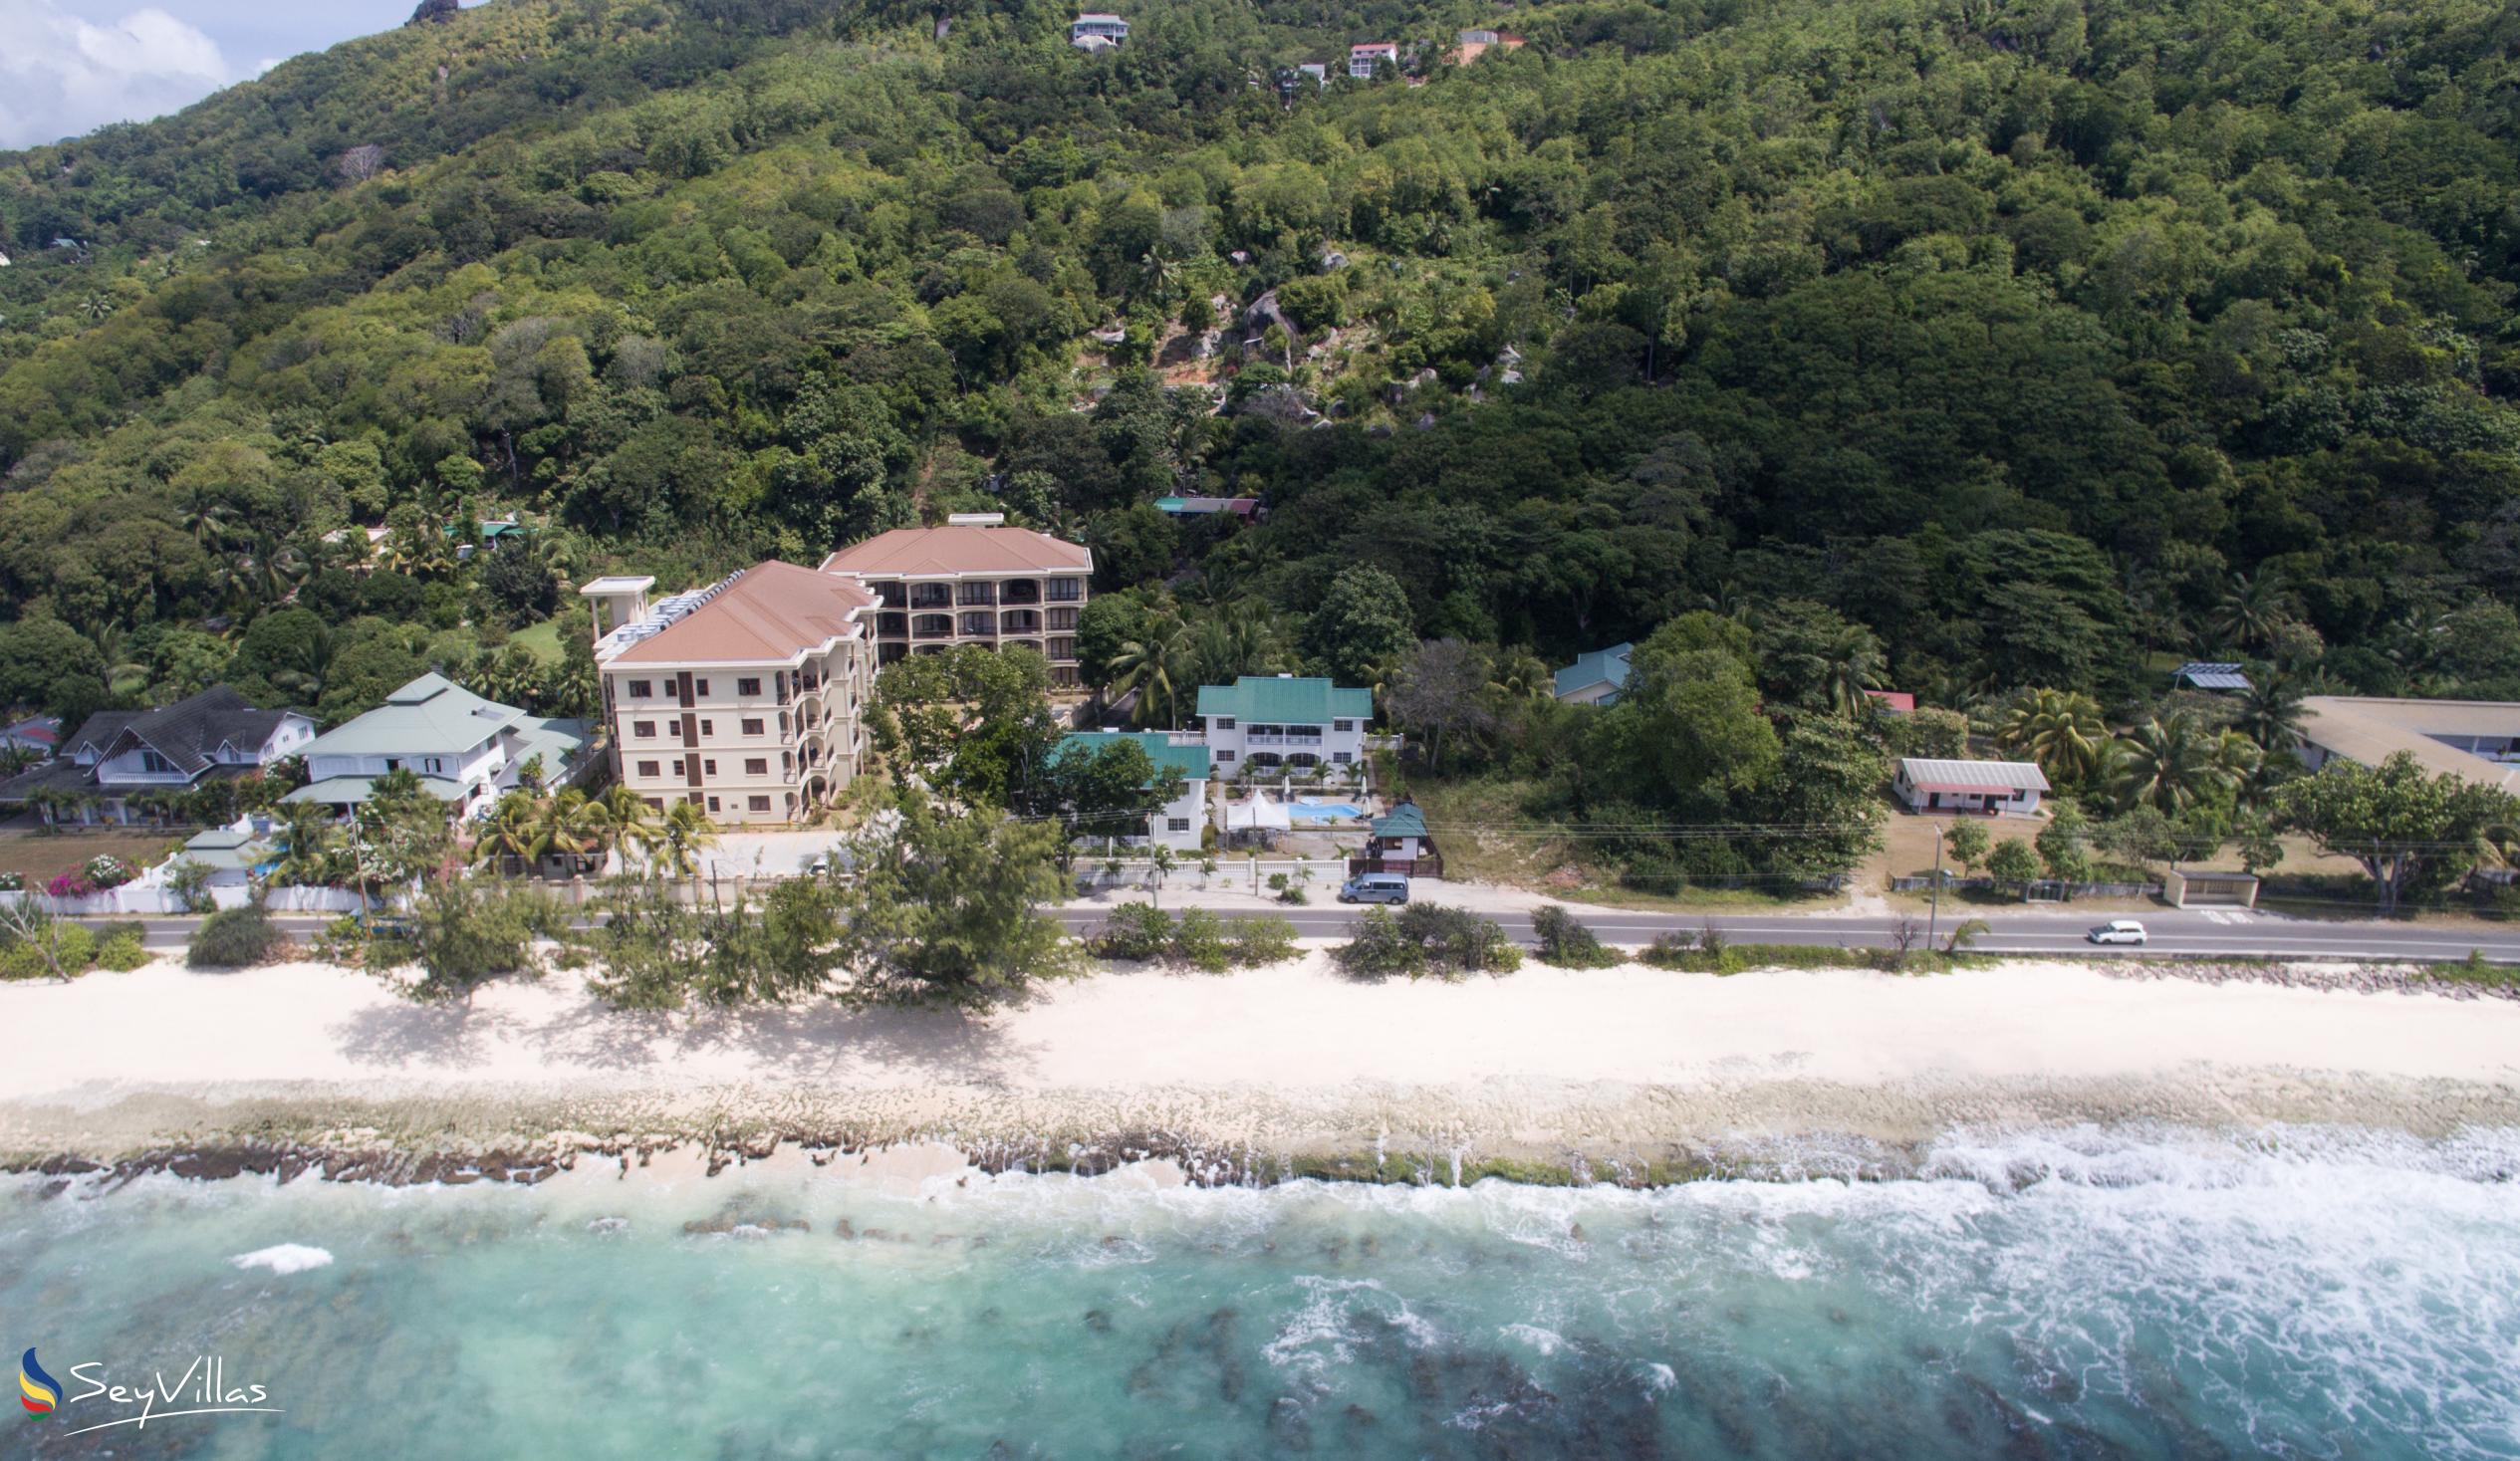 Photo 8: Villa Koket - Outdoor area - Mahé (Seychelles)